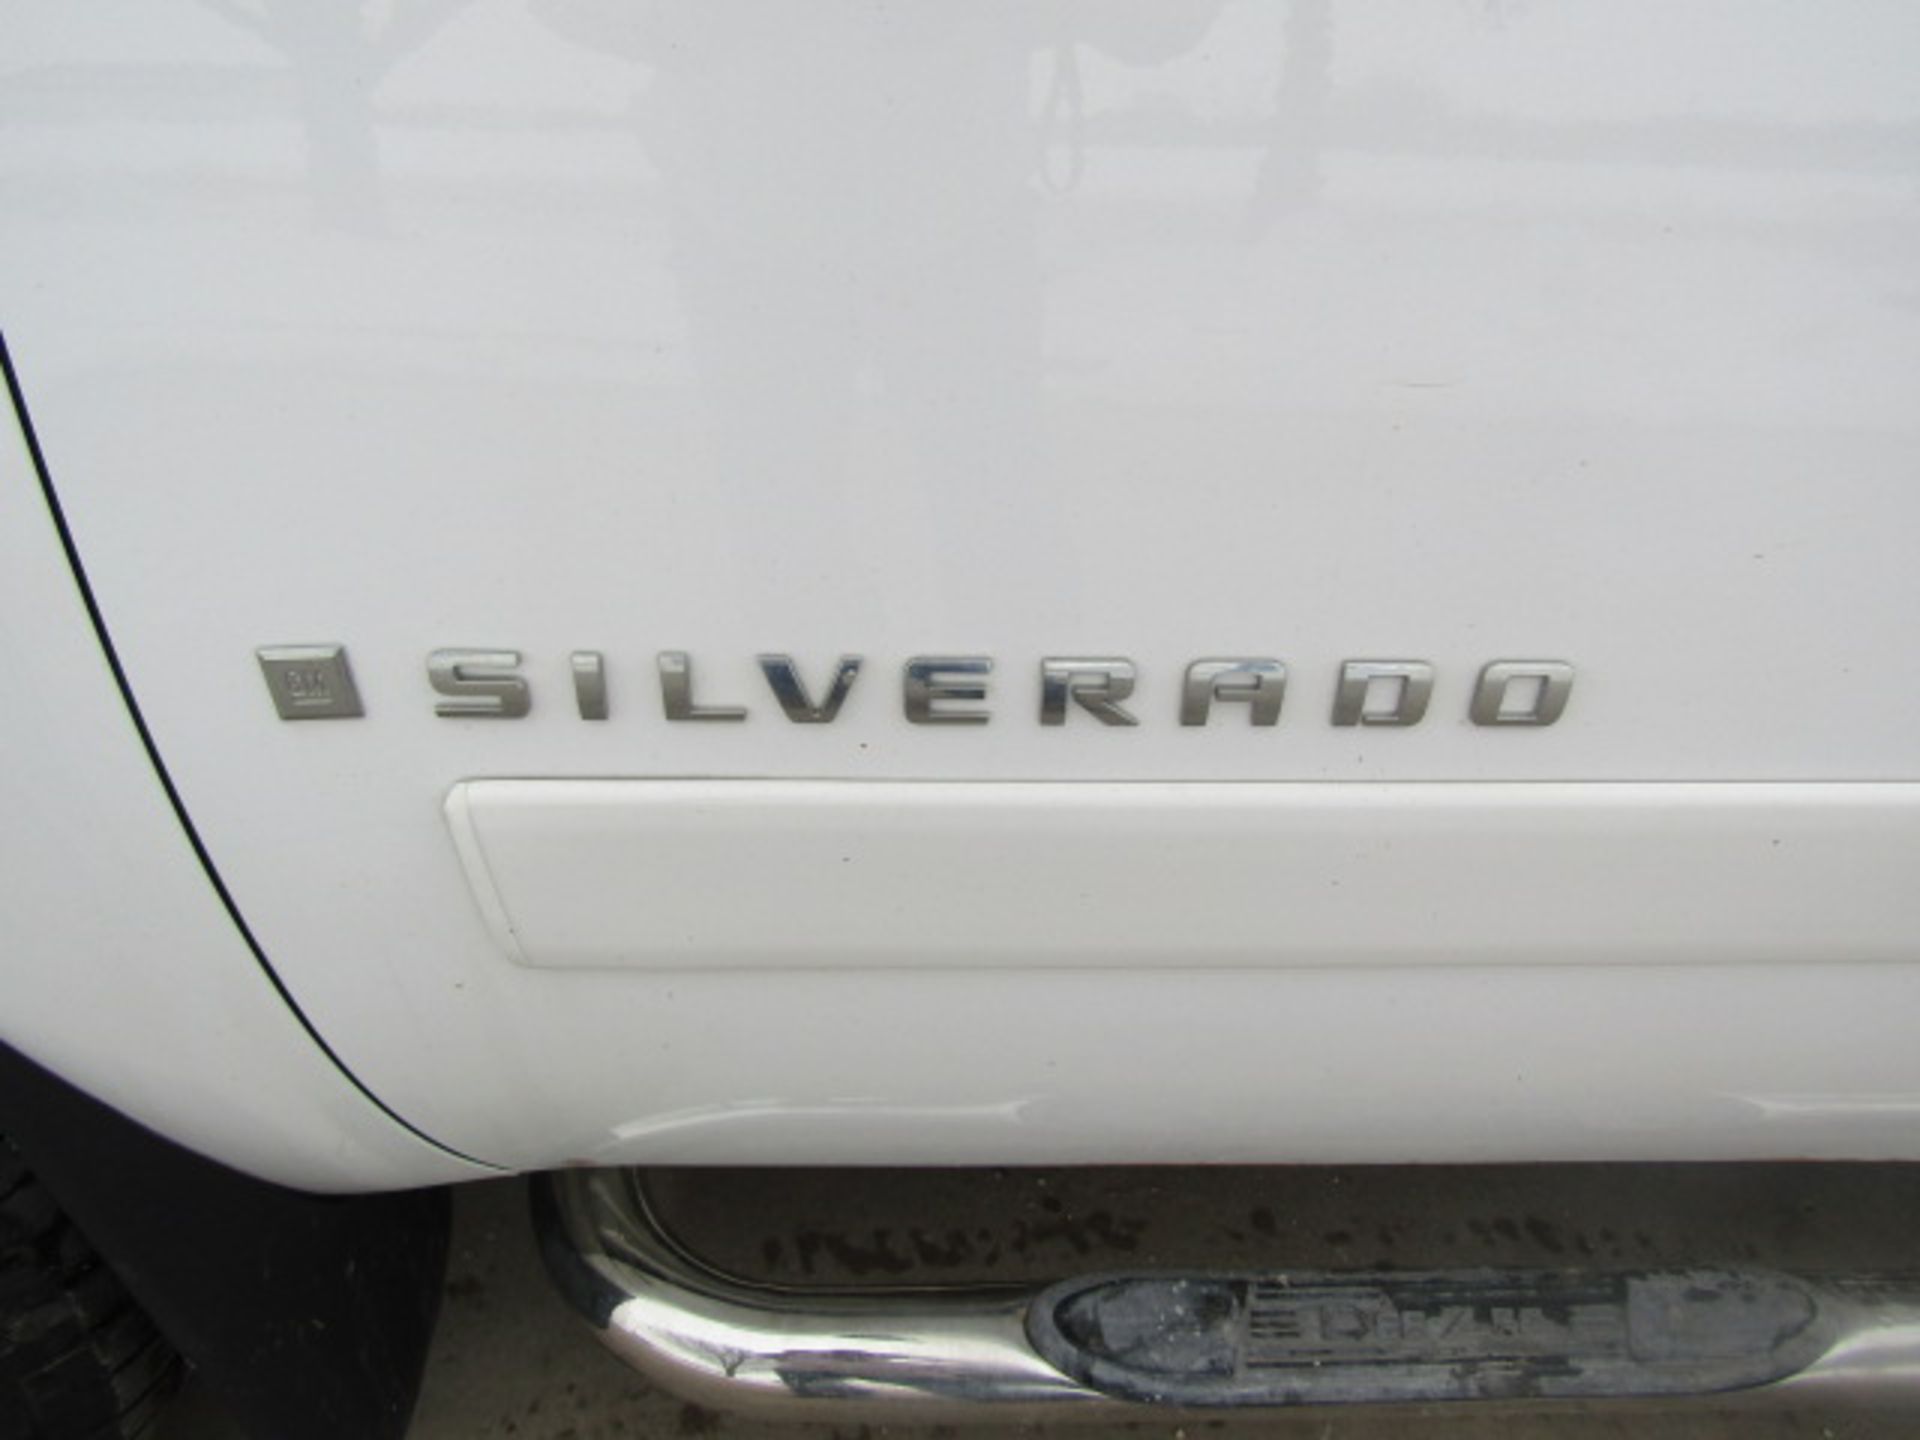 2008 Chevy Silverado Crew Cab Truck, Vin # 3GCEK13308G263401, Automatic 4x4 Transmission, 268,804 - Image 13 of 24